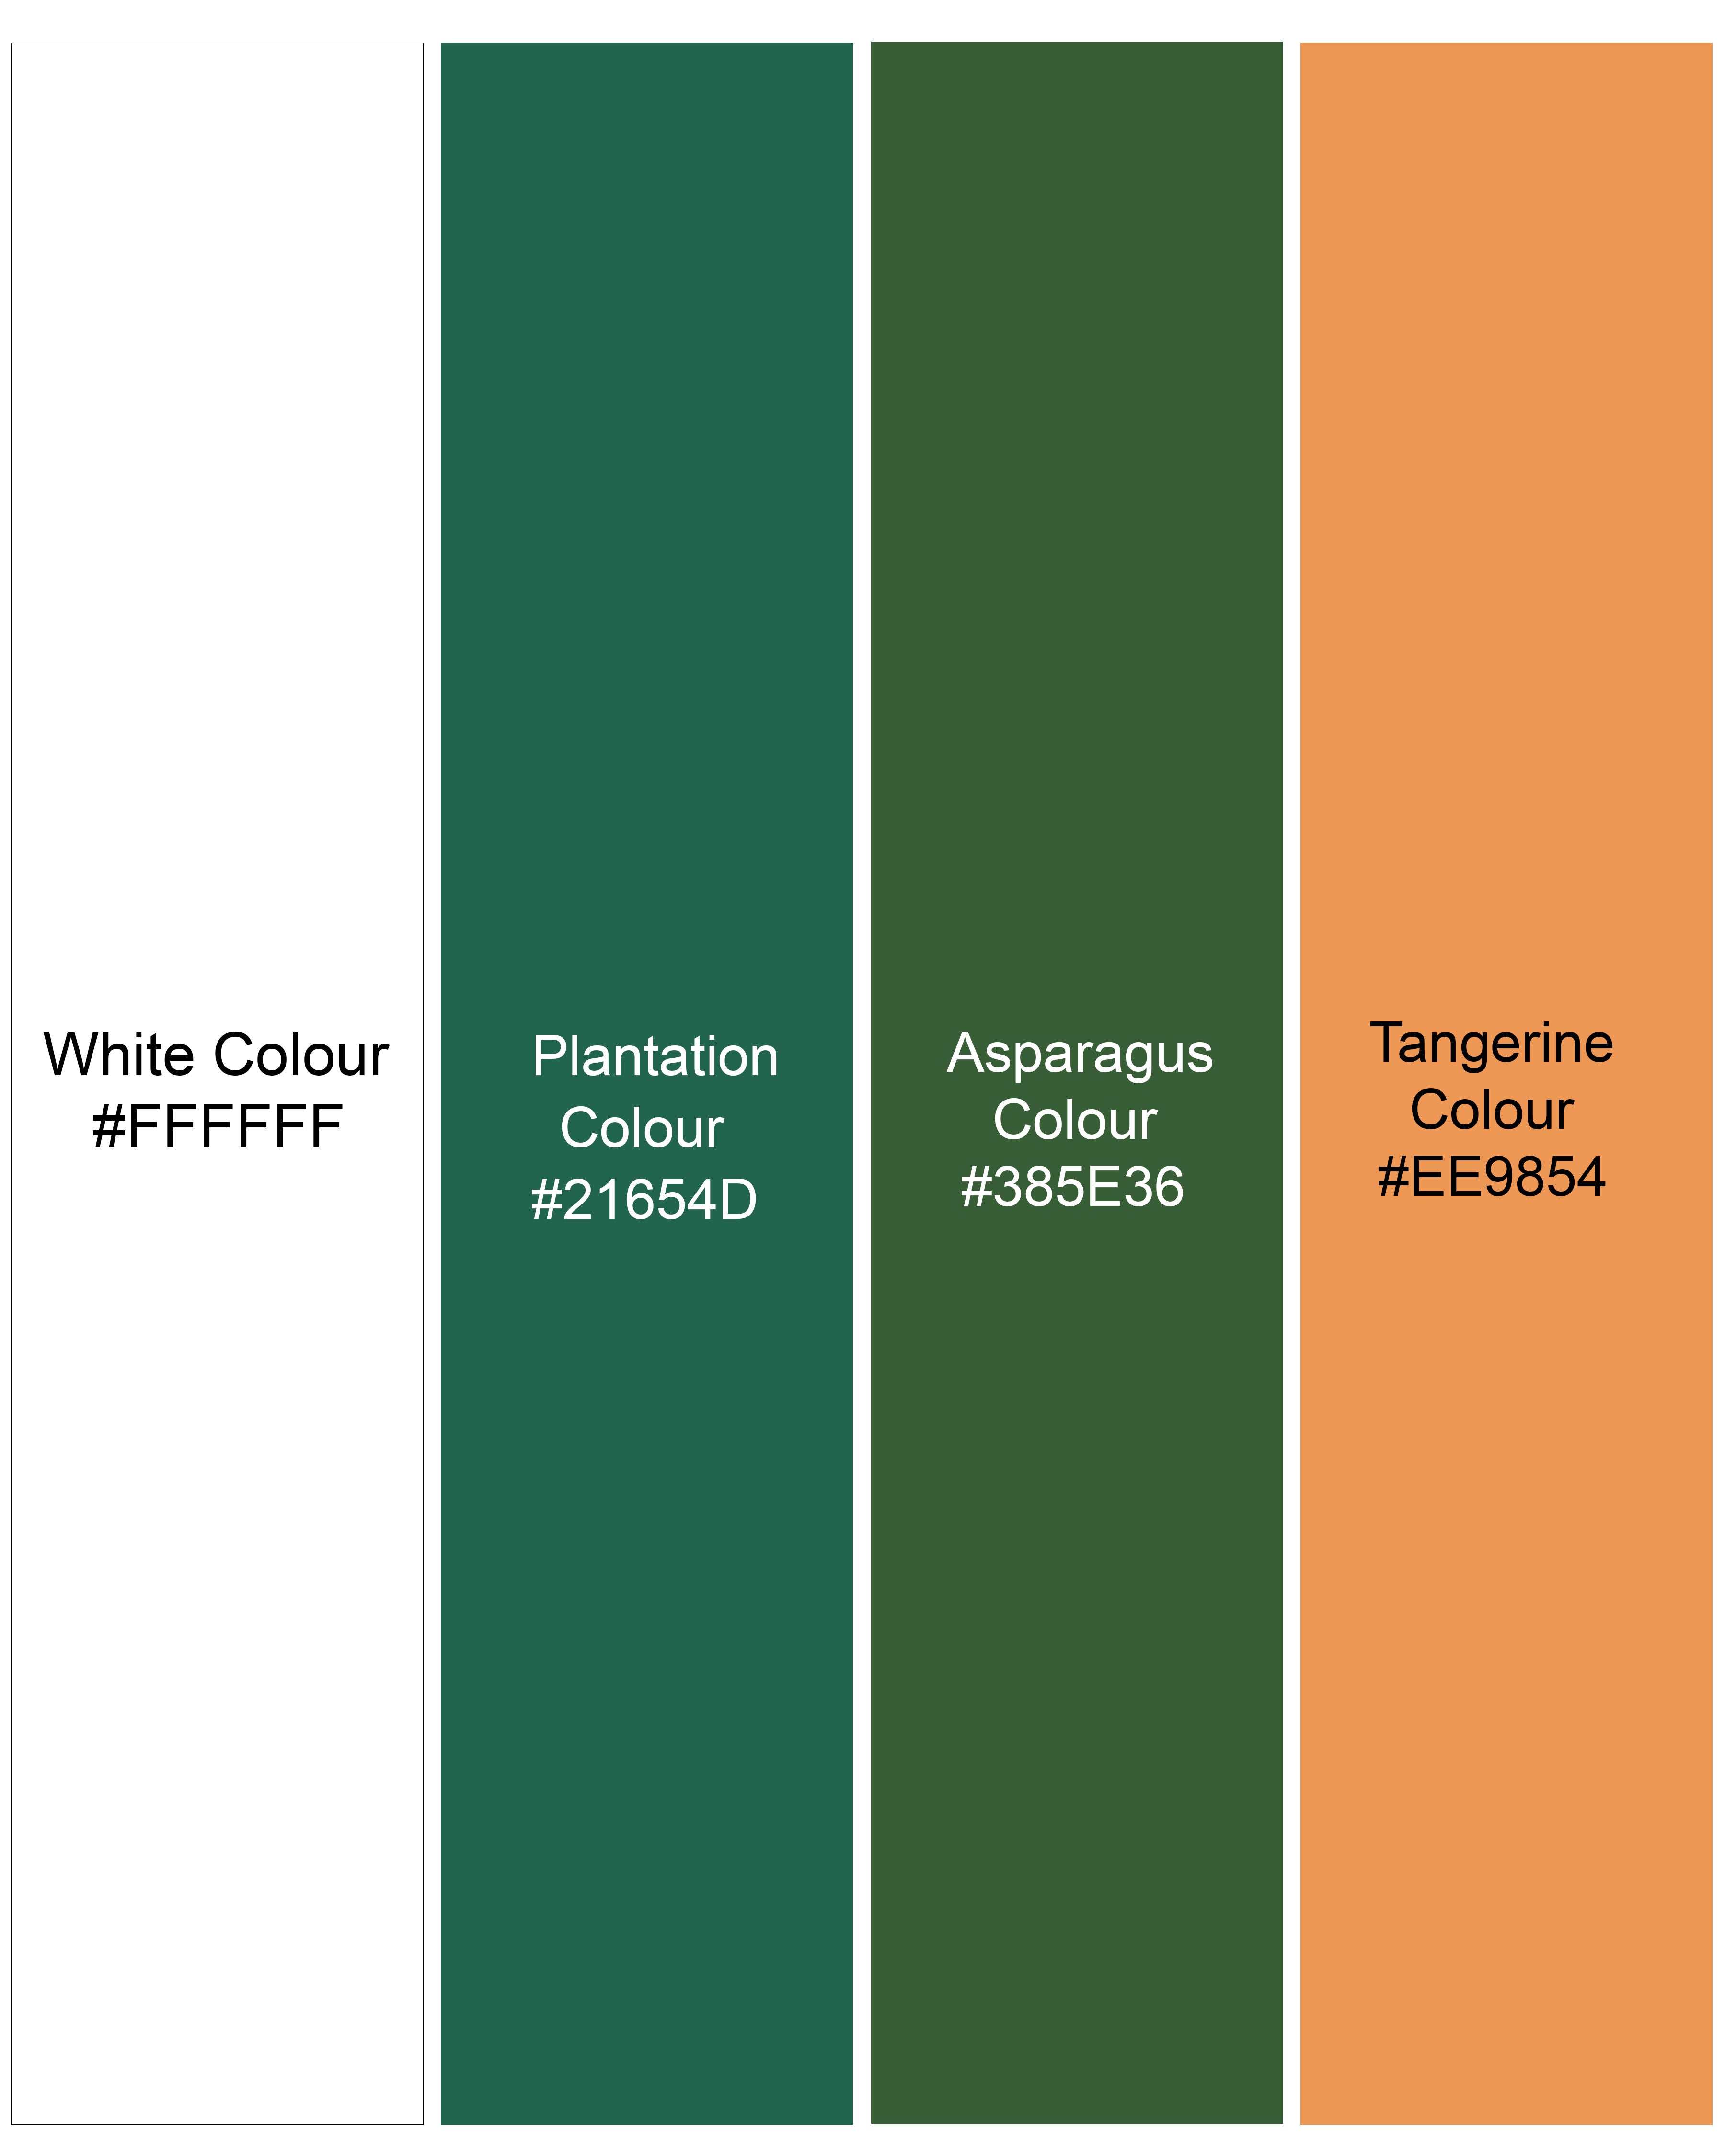 Plantation Green with White Checkered and Tiger Striped Premium Cotton Designer Shirt 9078-GR-P127-38, 9078-GR-P127-H-38, 9078-GR-P127-39, 9078-GR-P127-H-39, 9078-GR-P127-40, 9078-GR-P127-H-40, 9078-GR-P127-42, 9078-GR-P127-H-42, 9078-GR-P127-44, 9078-GR-P127-H-44, 9078-GR-P127-46, 9078-GR-P127-H-46, 9078-GR-P127-48, 9078-GR-P127-H-48, 9078-GR-P127-50, 9078-GR-P127-H-50, 9078-GR-P127-52, 9078-GR-P127-H-52